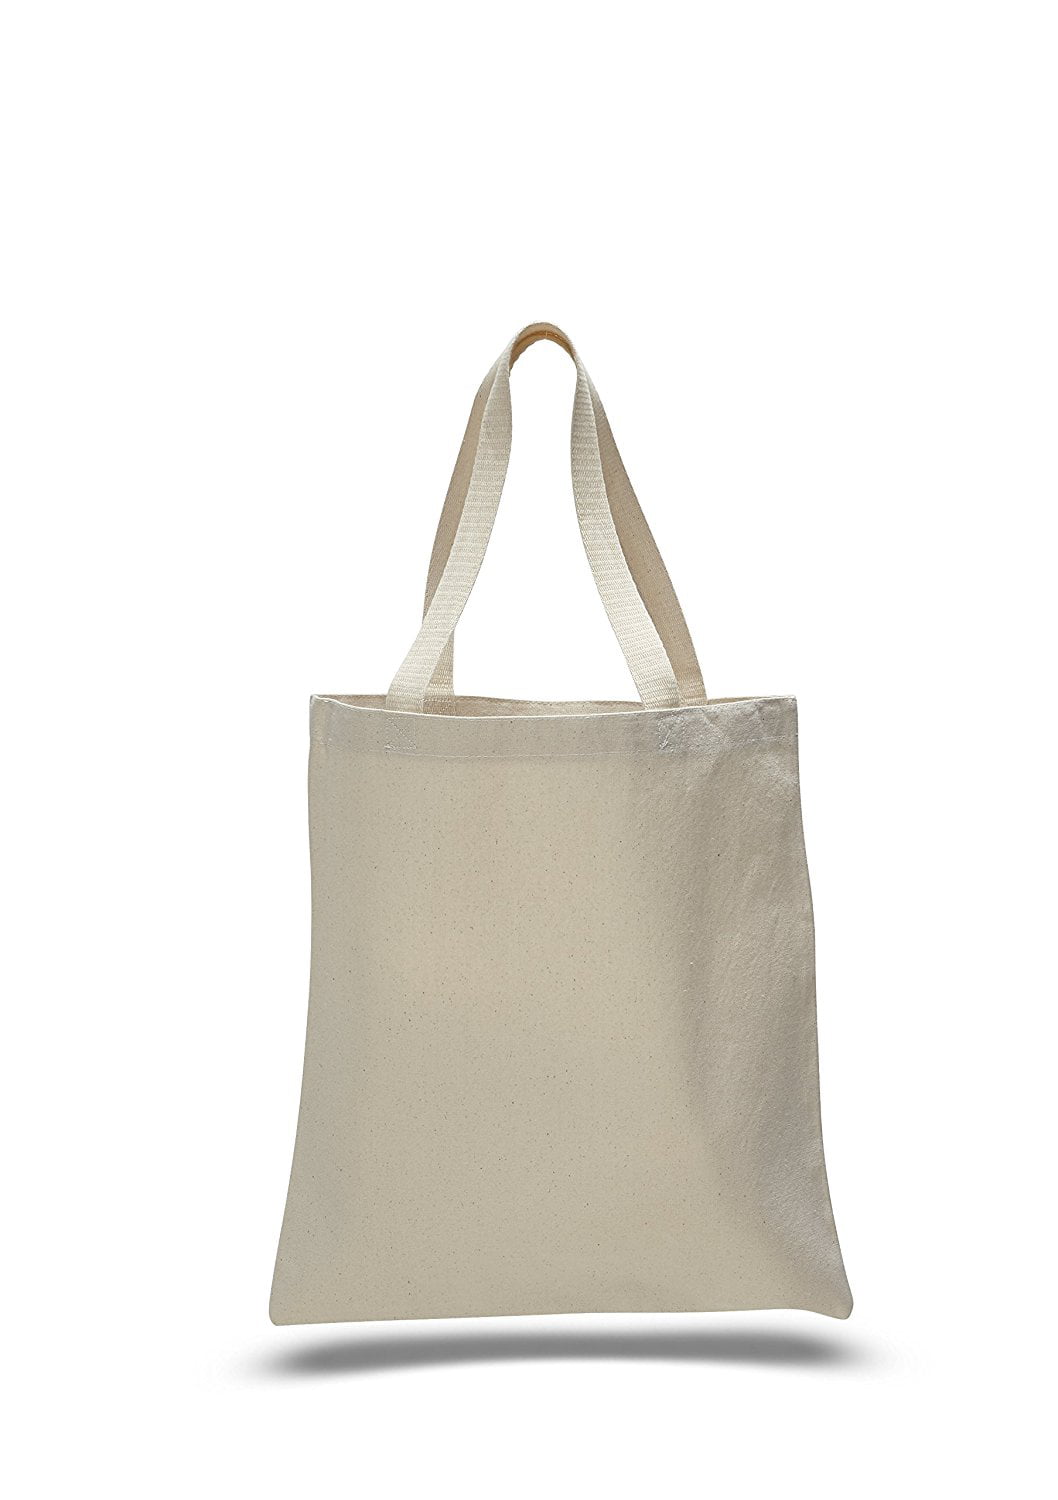 Details about   4 Blank Natural Beige Color Canvas Tote Bags Plain Bag Canvas Eco Friendly Reuse 